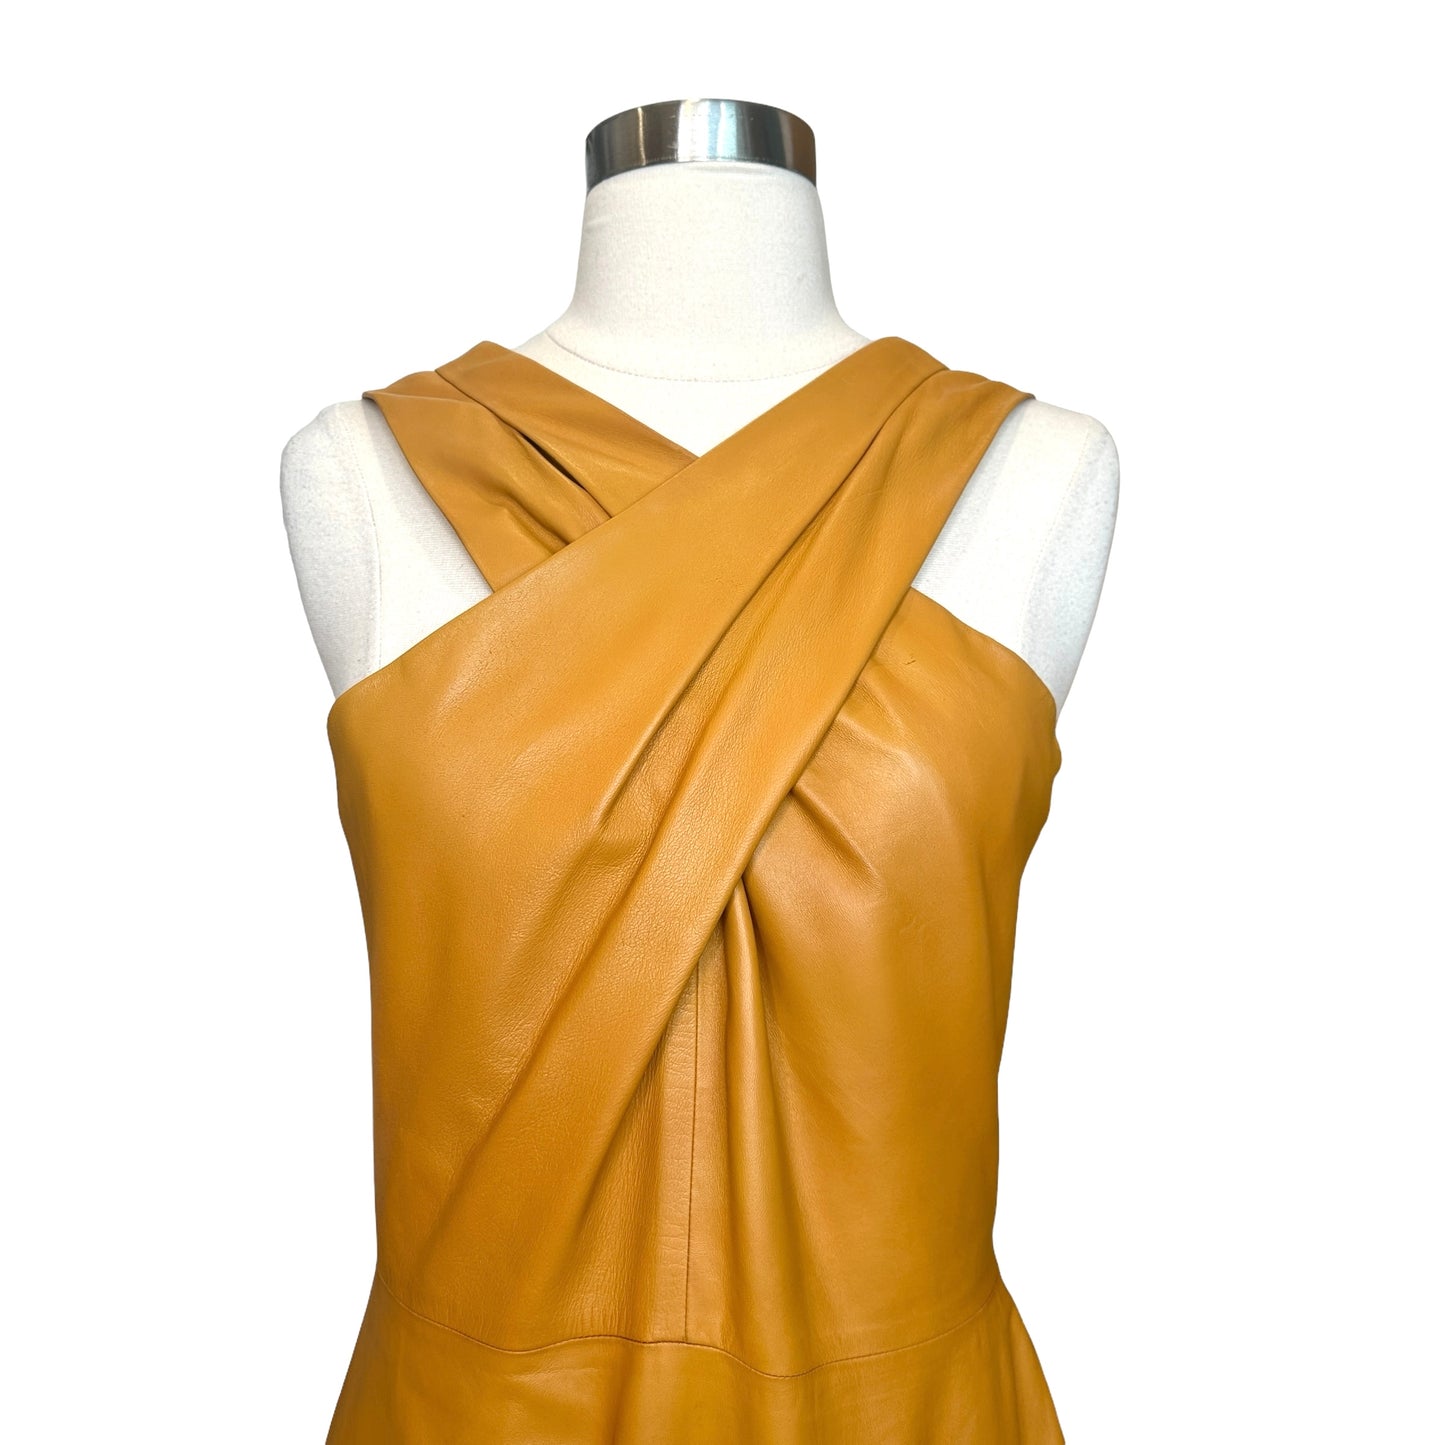 Lambskin Leather Dress - S/M